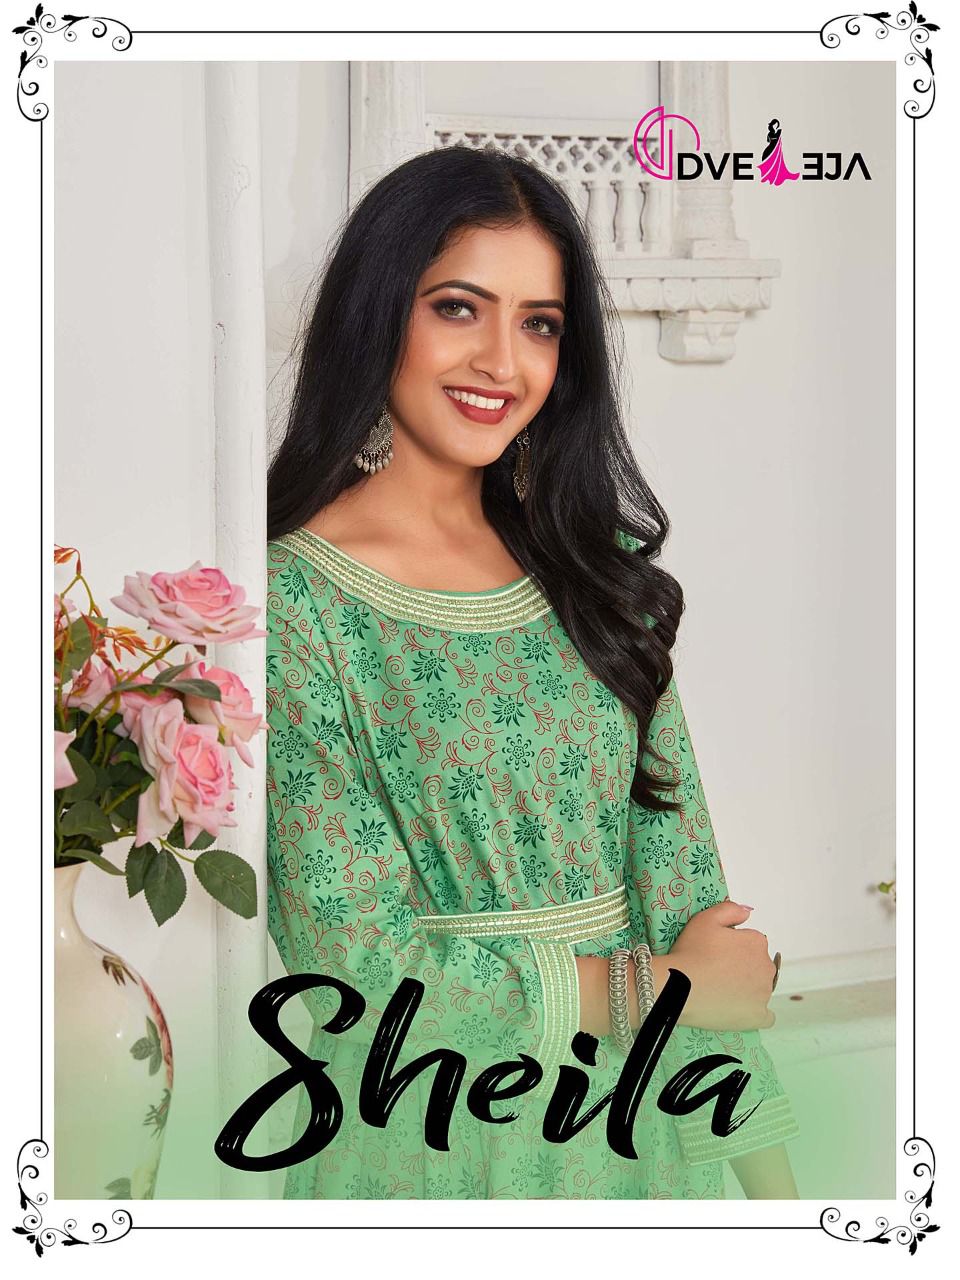 Dveeja Sheila collection 4